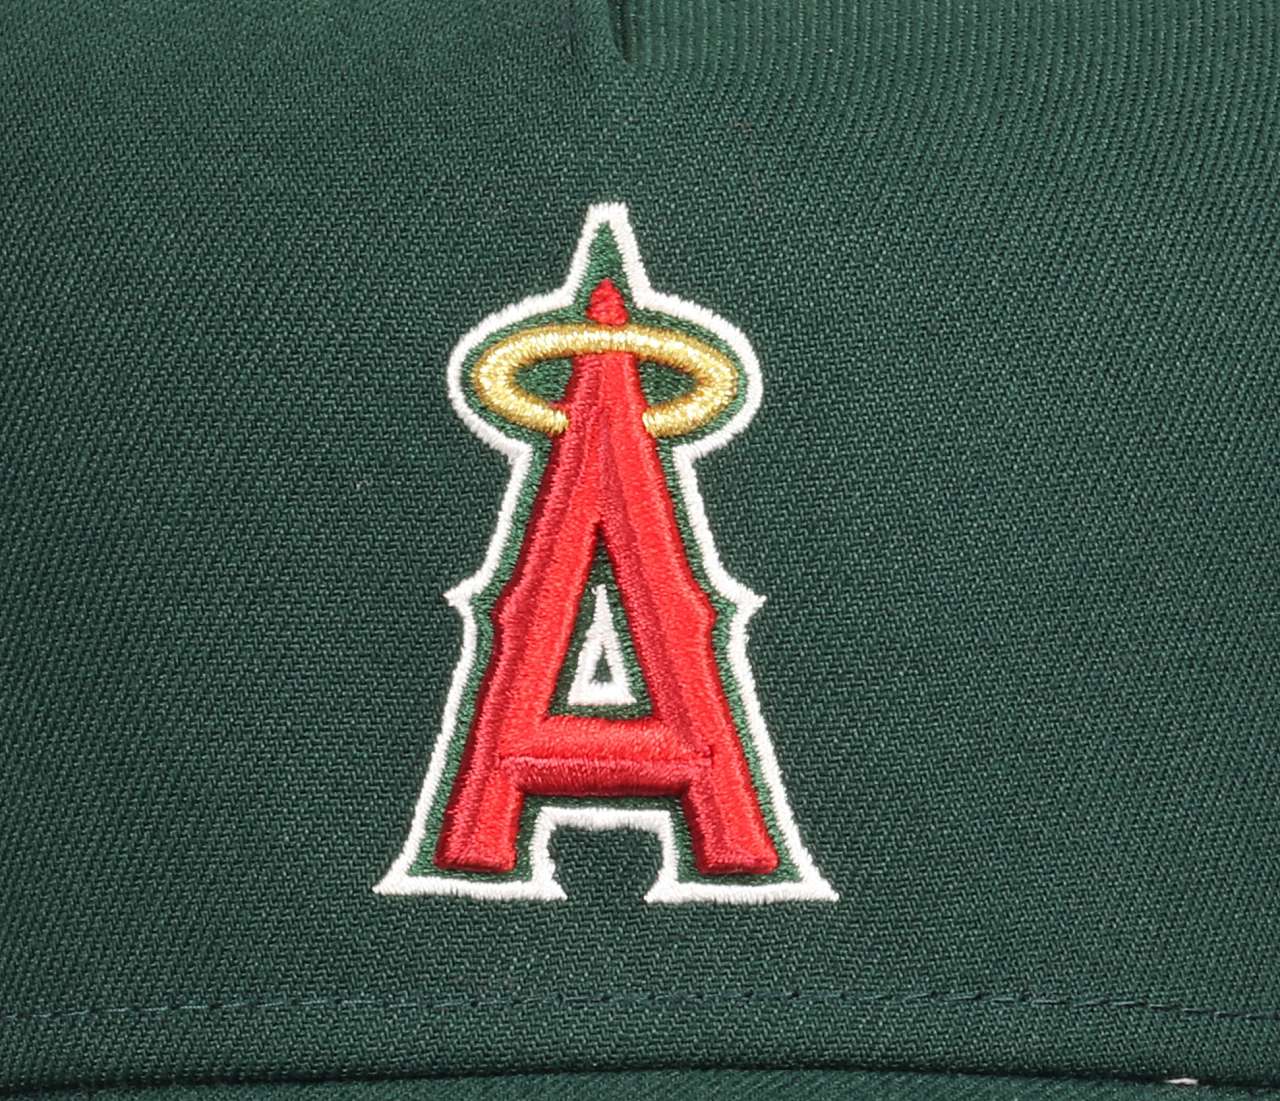 Anaheim Angels MLB 35th Anniversary Sidepatch Dark Green 9Forty A-Frame Adjustable Cap New Era